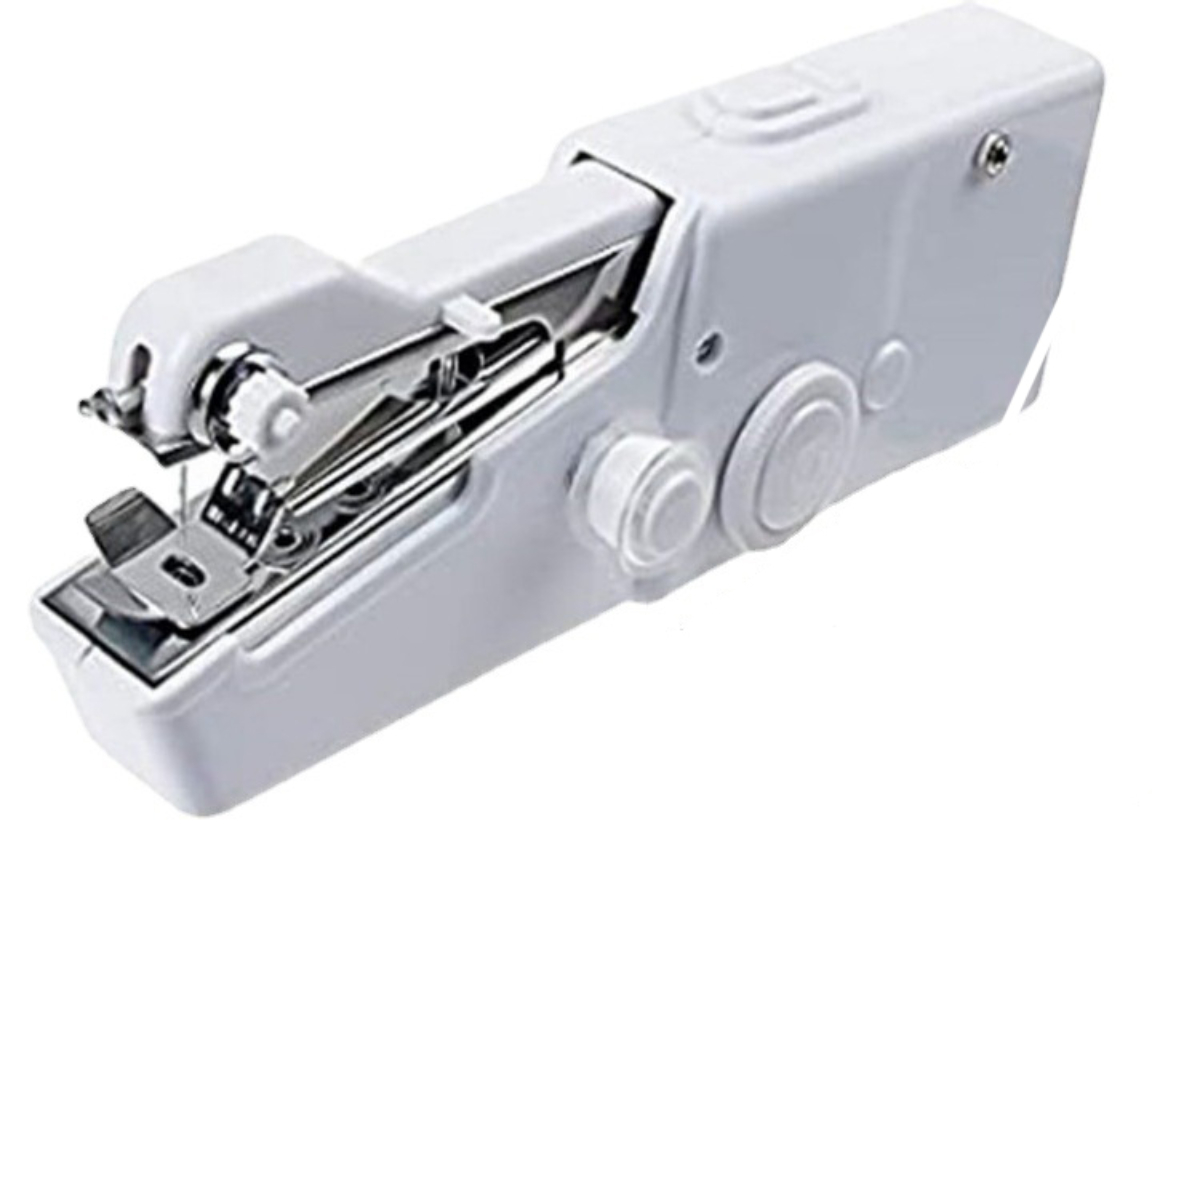 Mini-Elektro-Nähmaschine SYNTEK plus Handnähmaschine Nähmaschine Nähmaschinen-Set Nähmaschine Zubehör